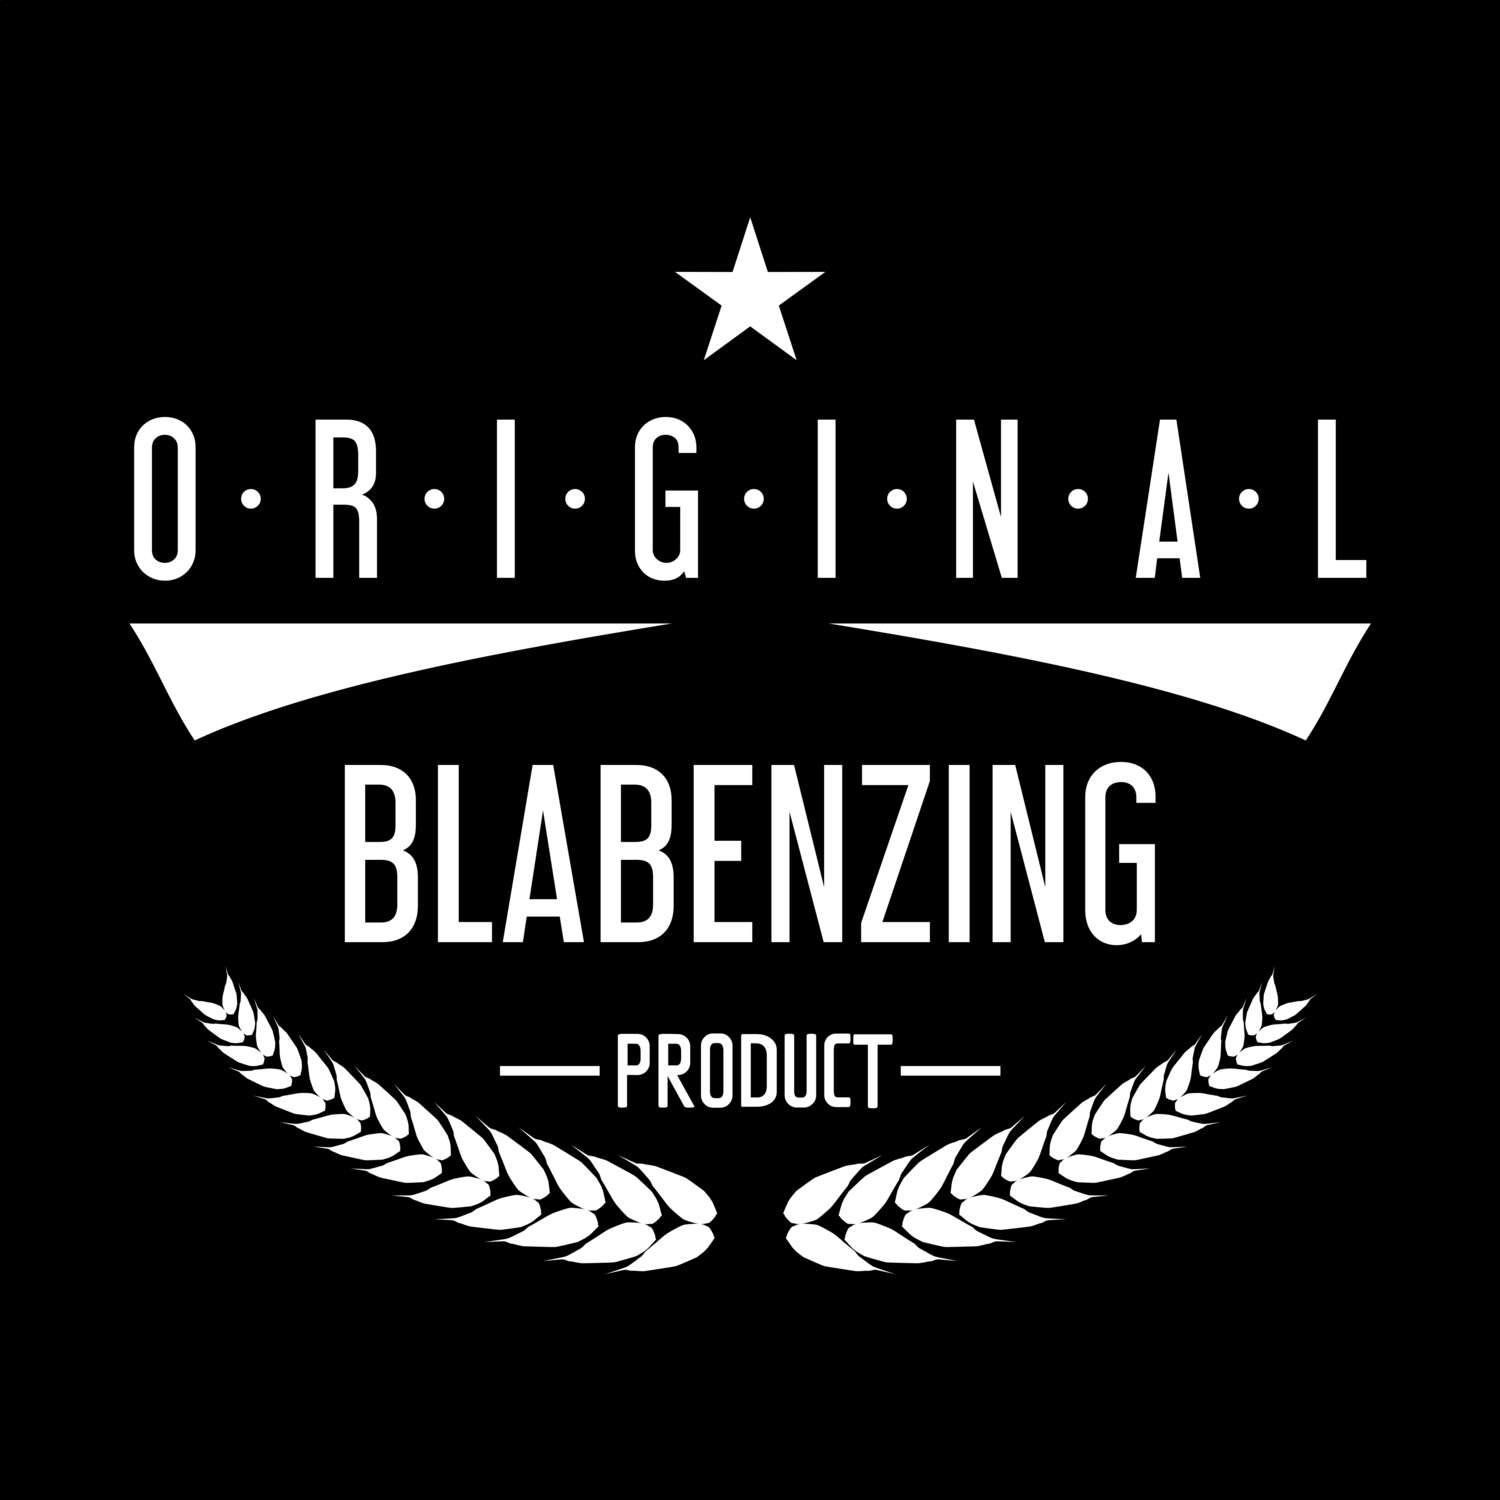 Blabenzing T-Shirt »Original Product«